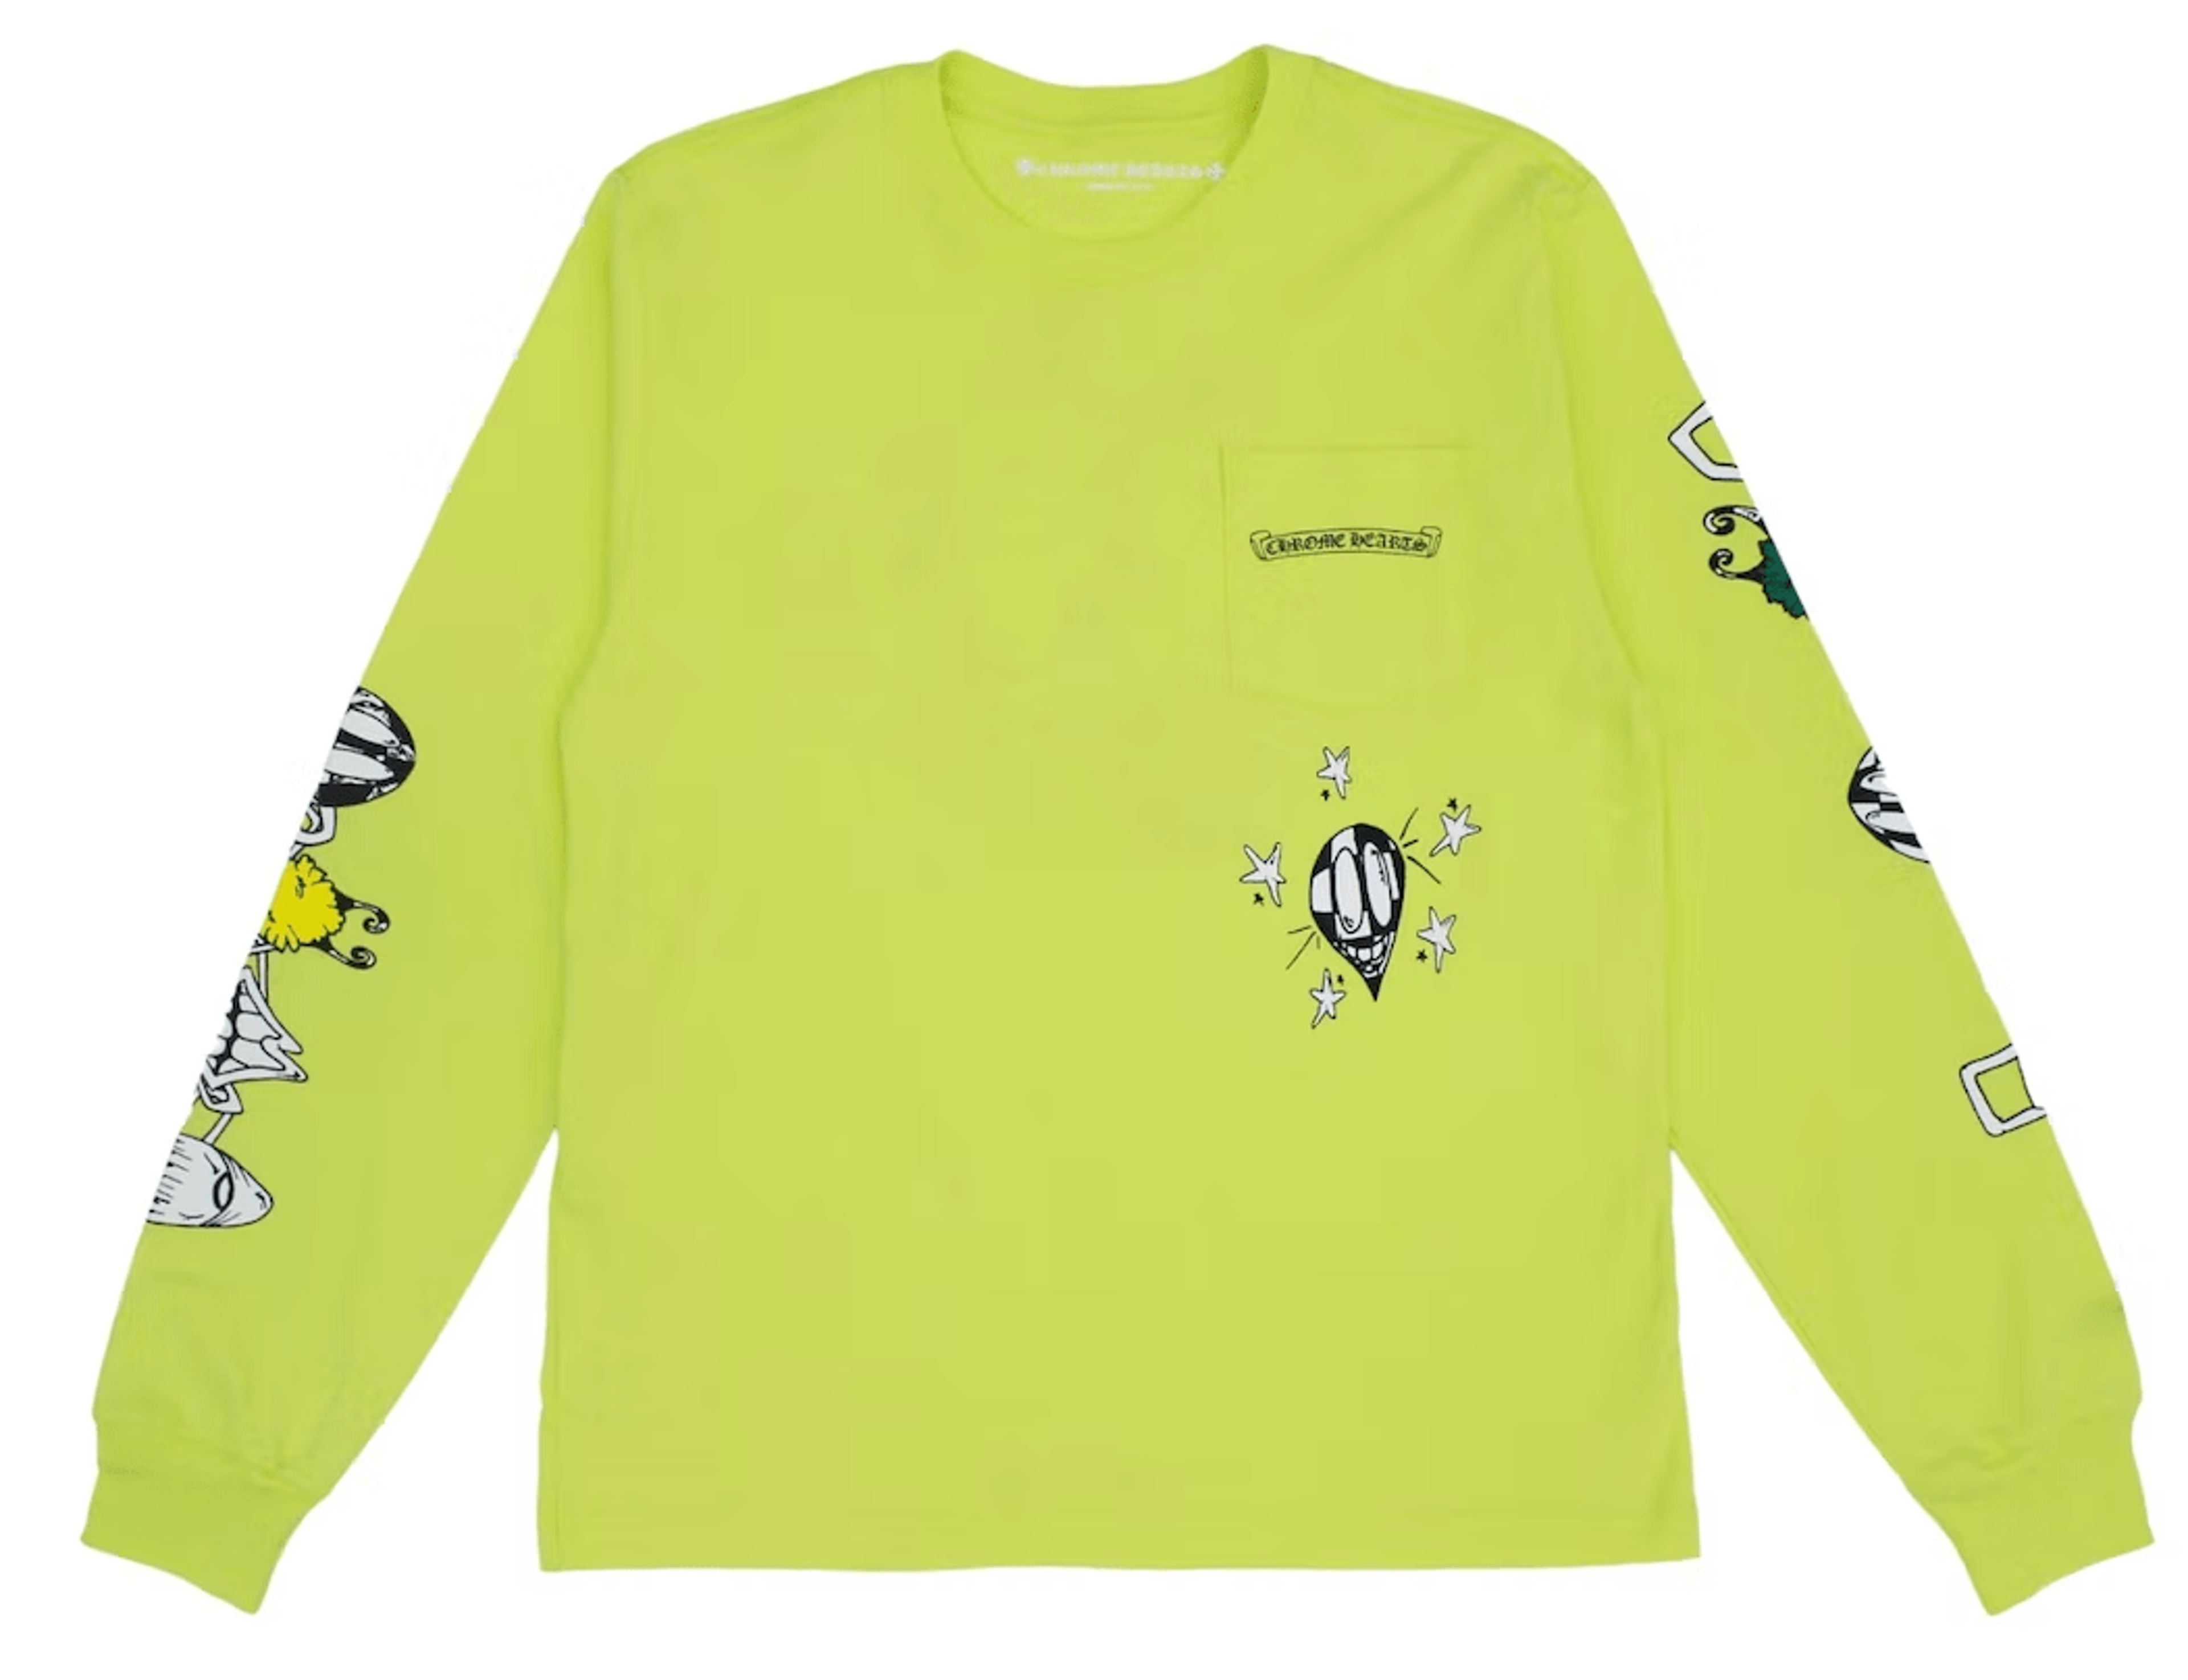 Alternate View 1 of Chrome Hearts Matty Boy Link Long Sleeve Tee Shirt Lime Green